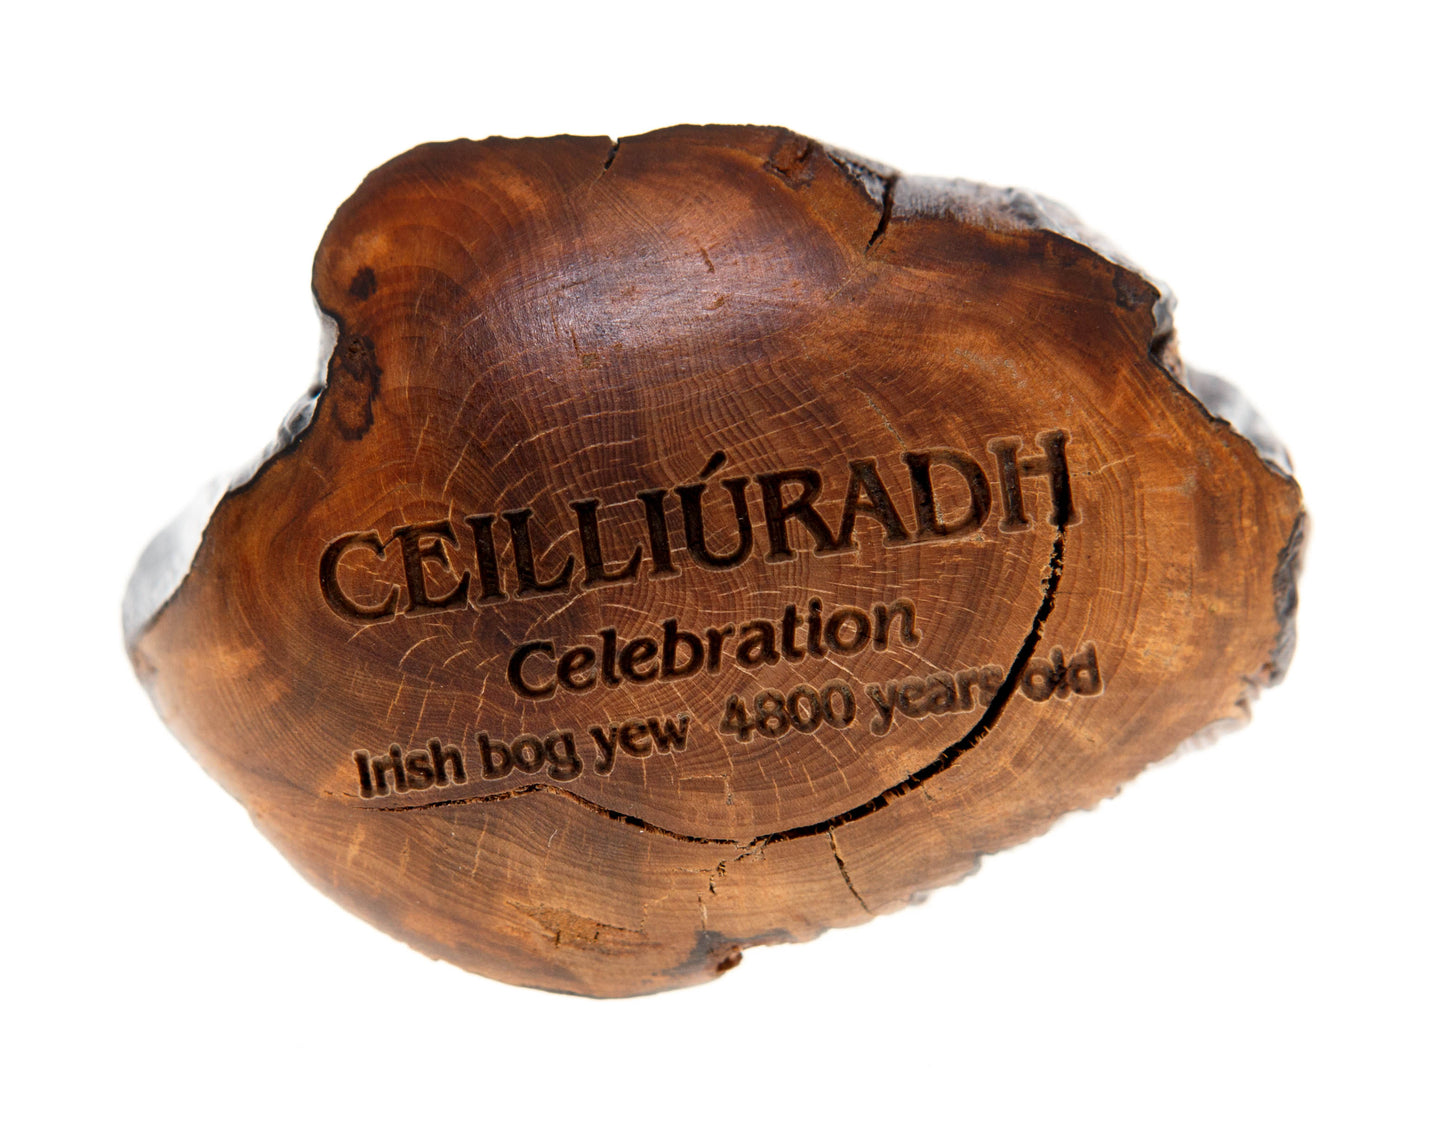 Wishstone CEILLIÚRADH Celebration Irish bog yew 4800 years old